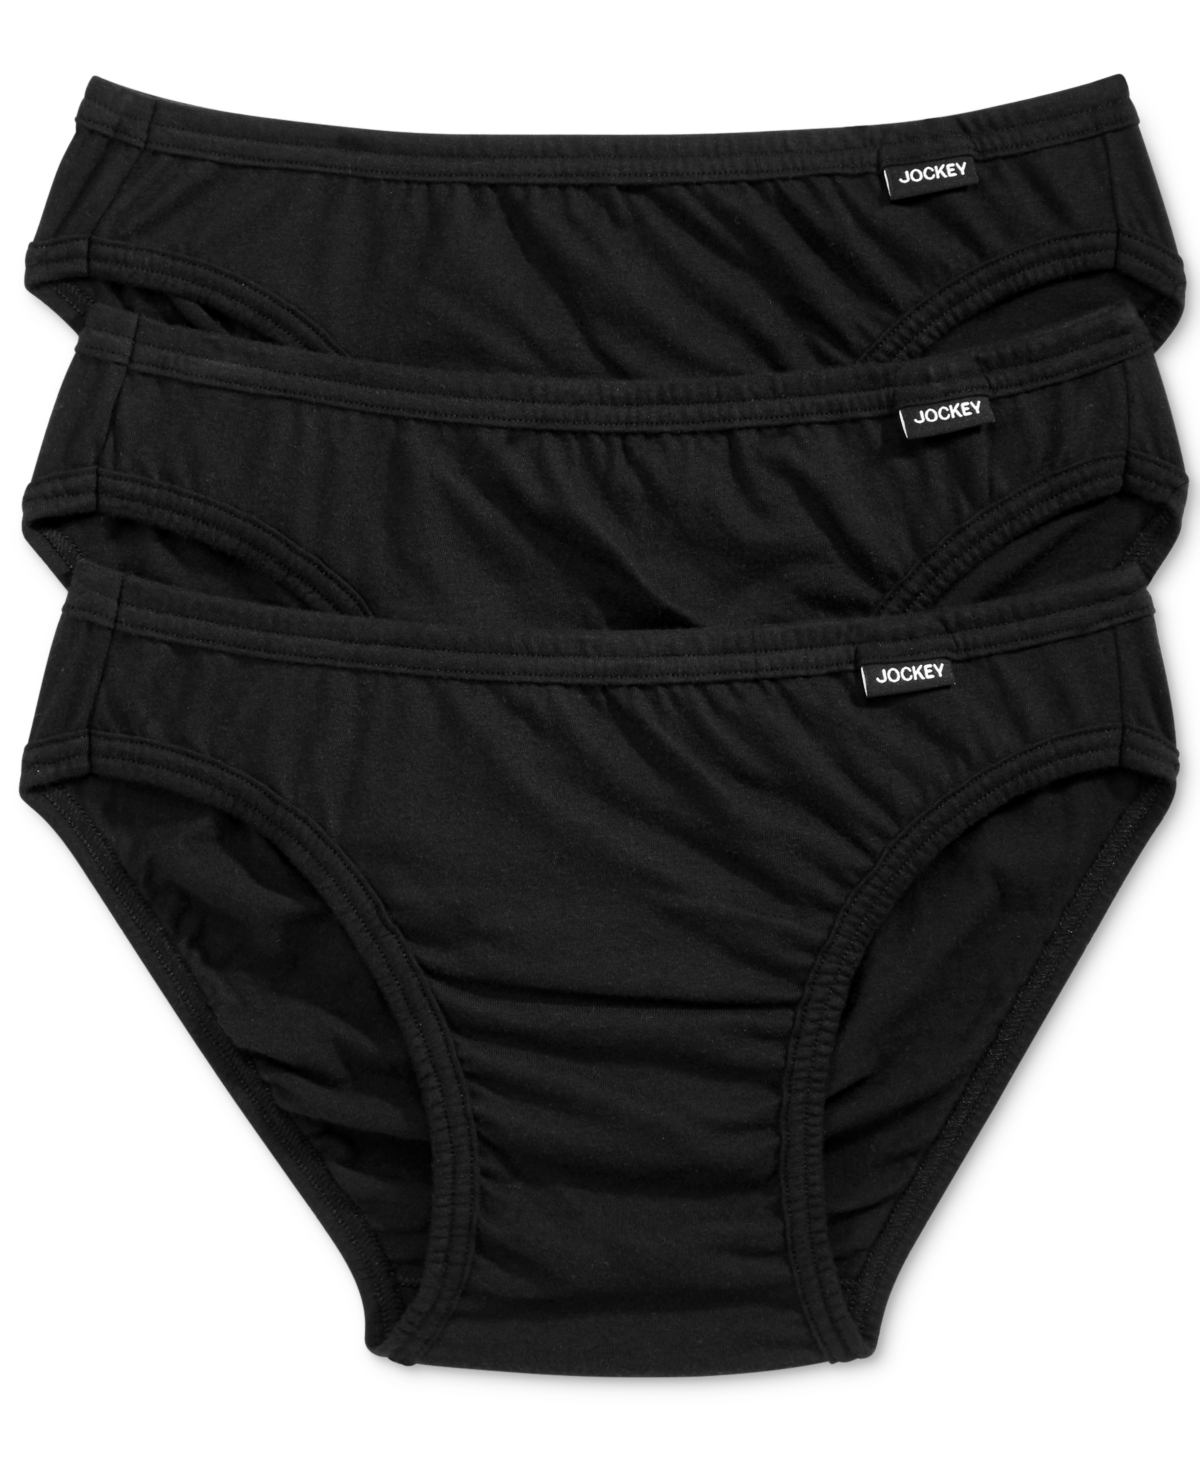 Men's Underwear, Elance Bikini 3-Pack - White